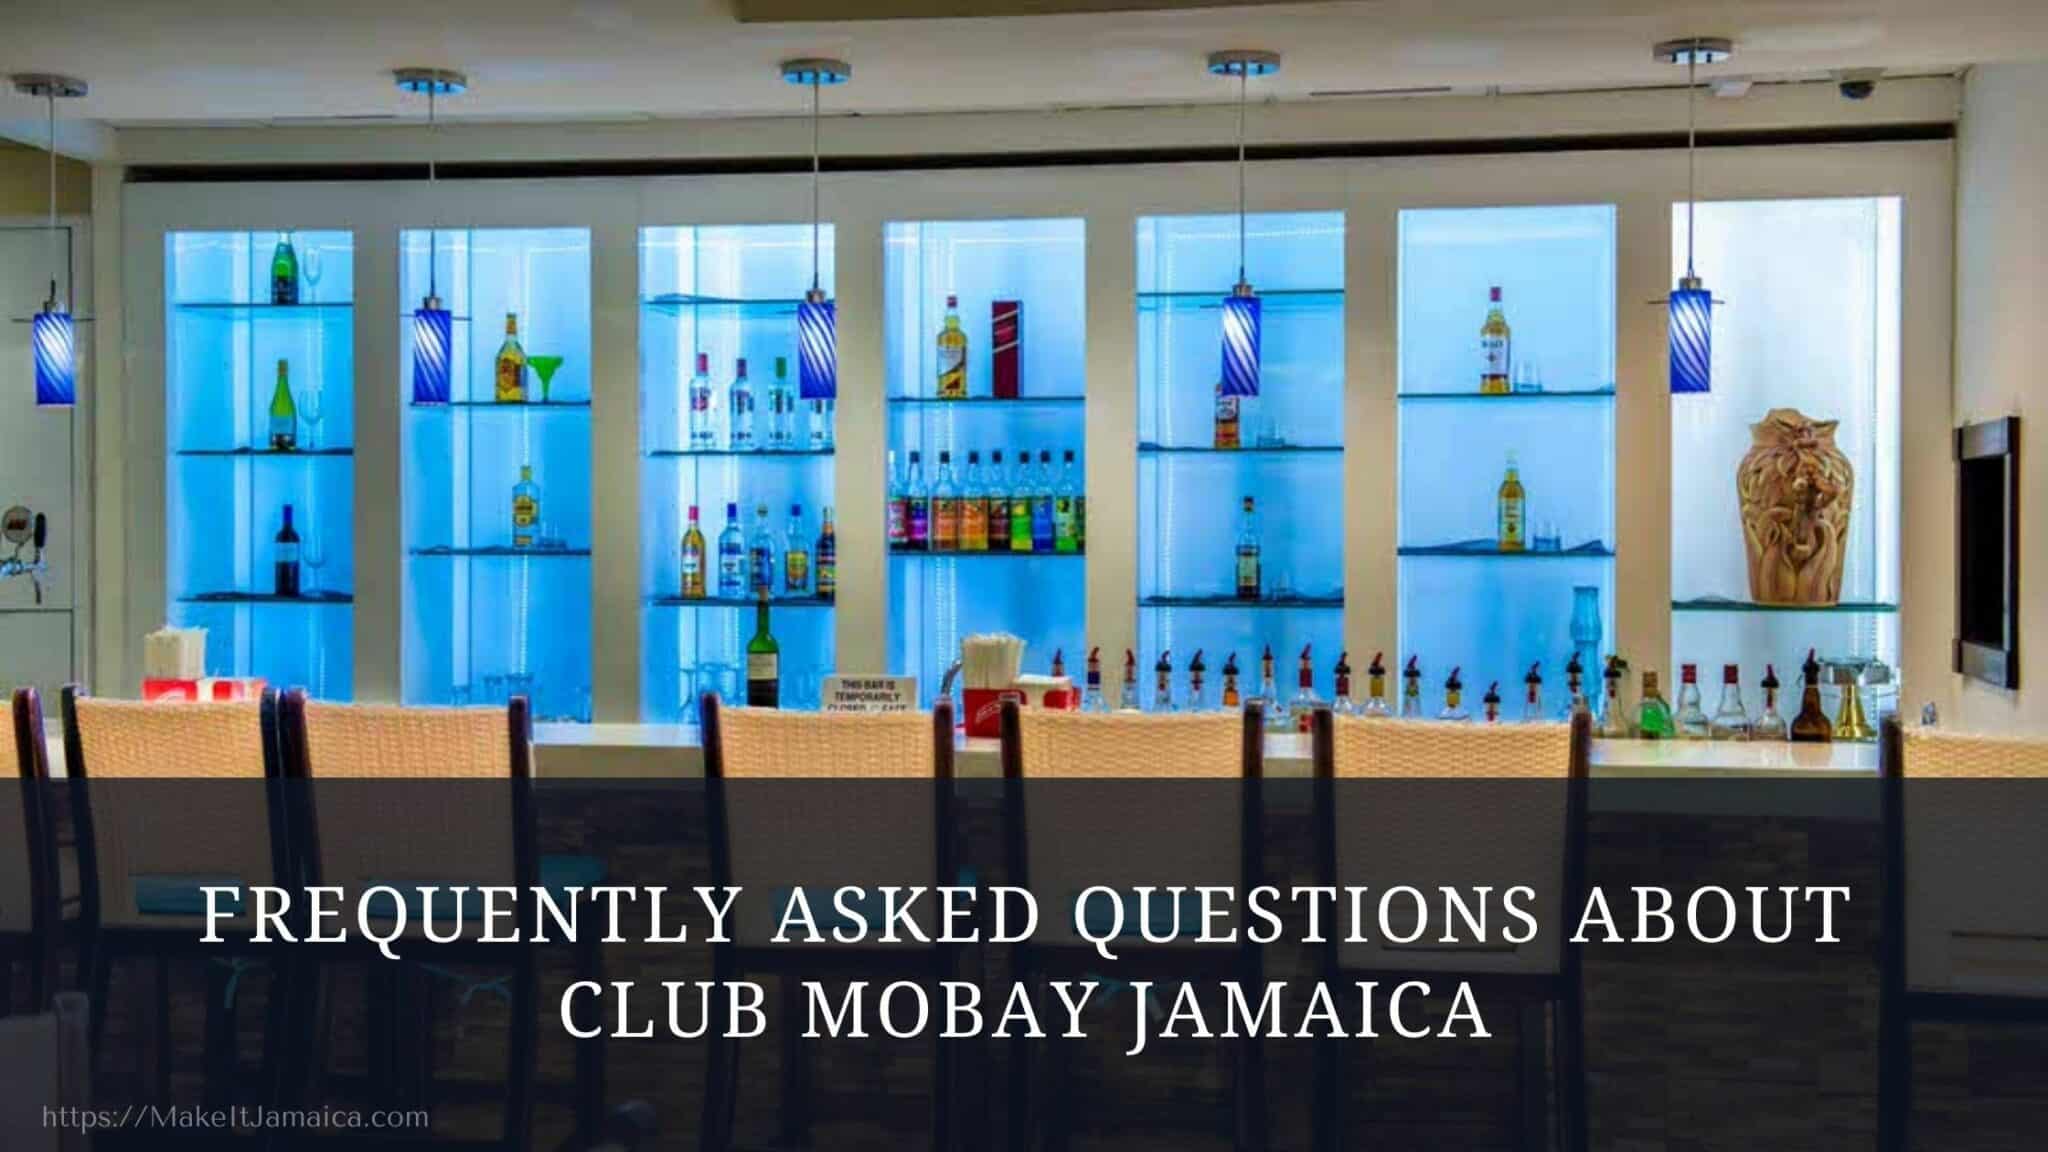 Club Mobay Jamaica departure lounge